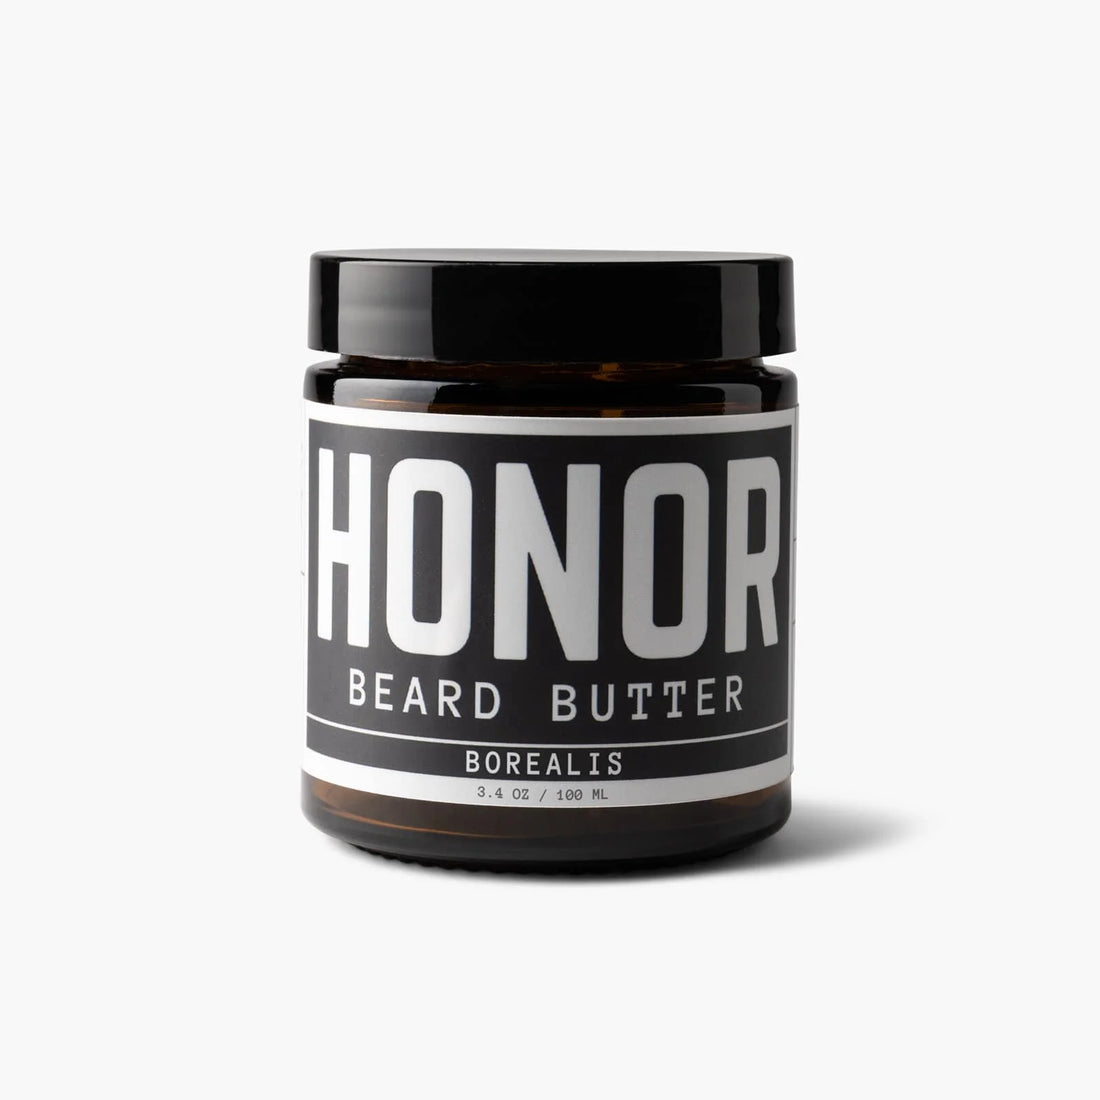 Honor Beard Butter Borealis